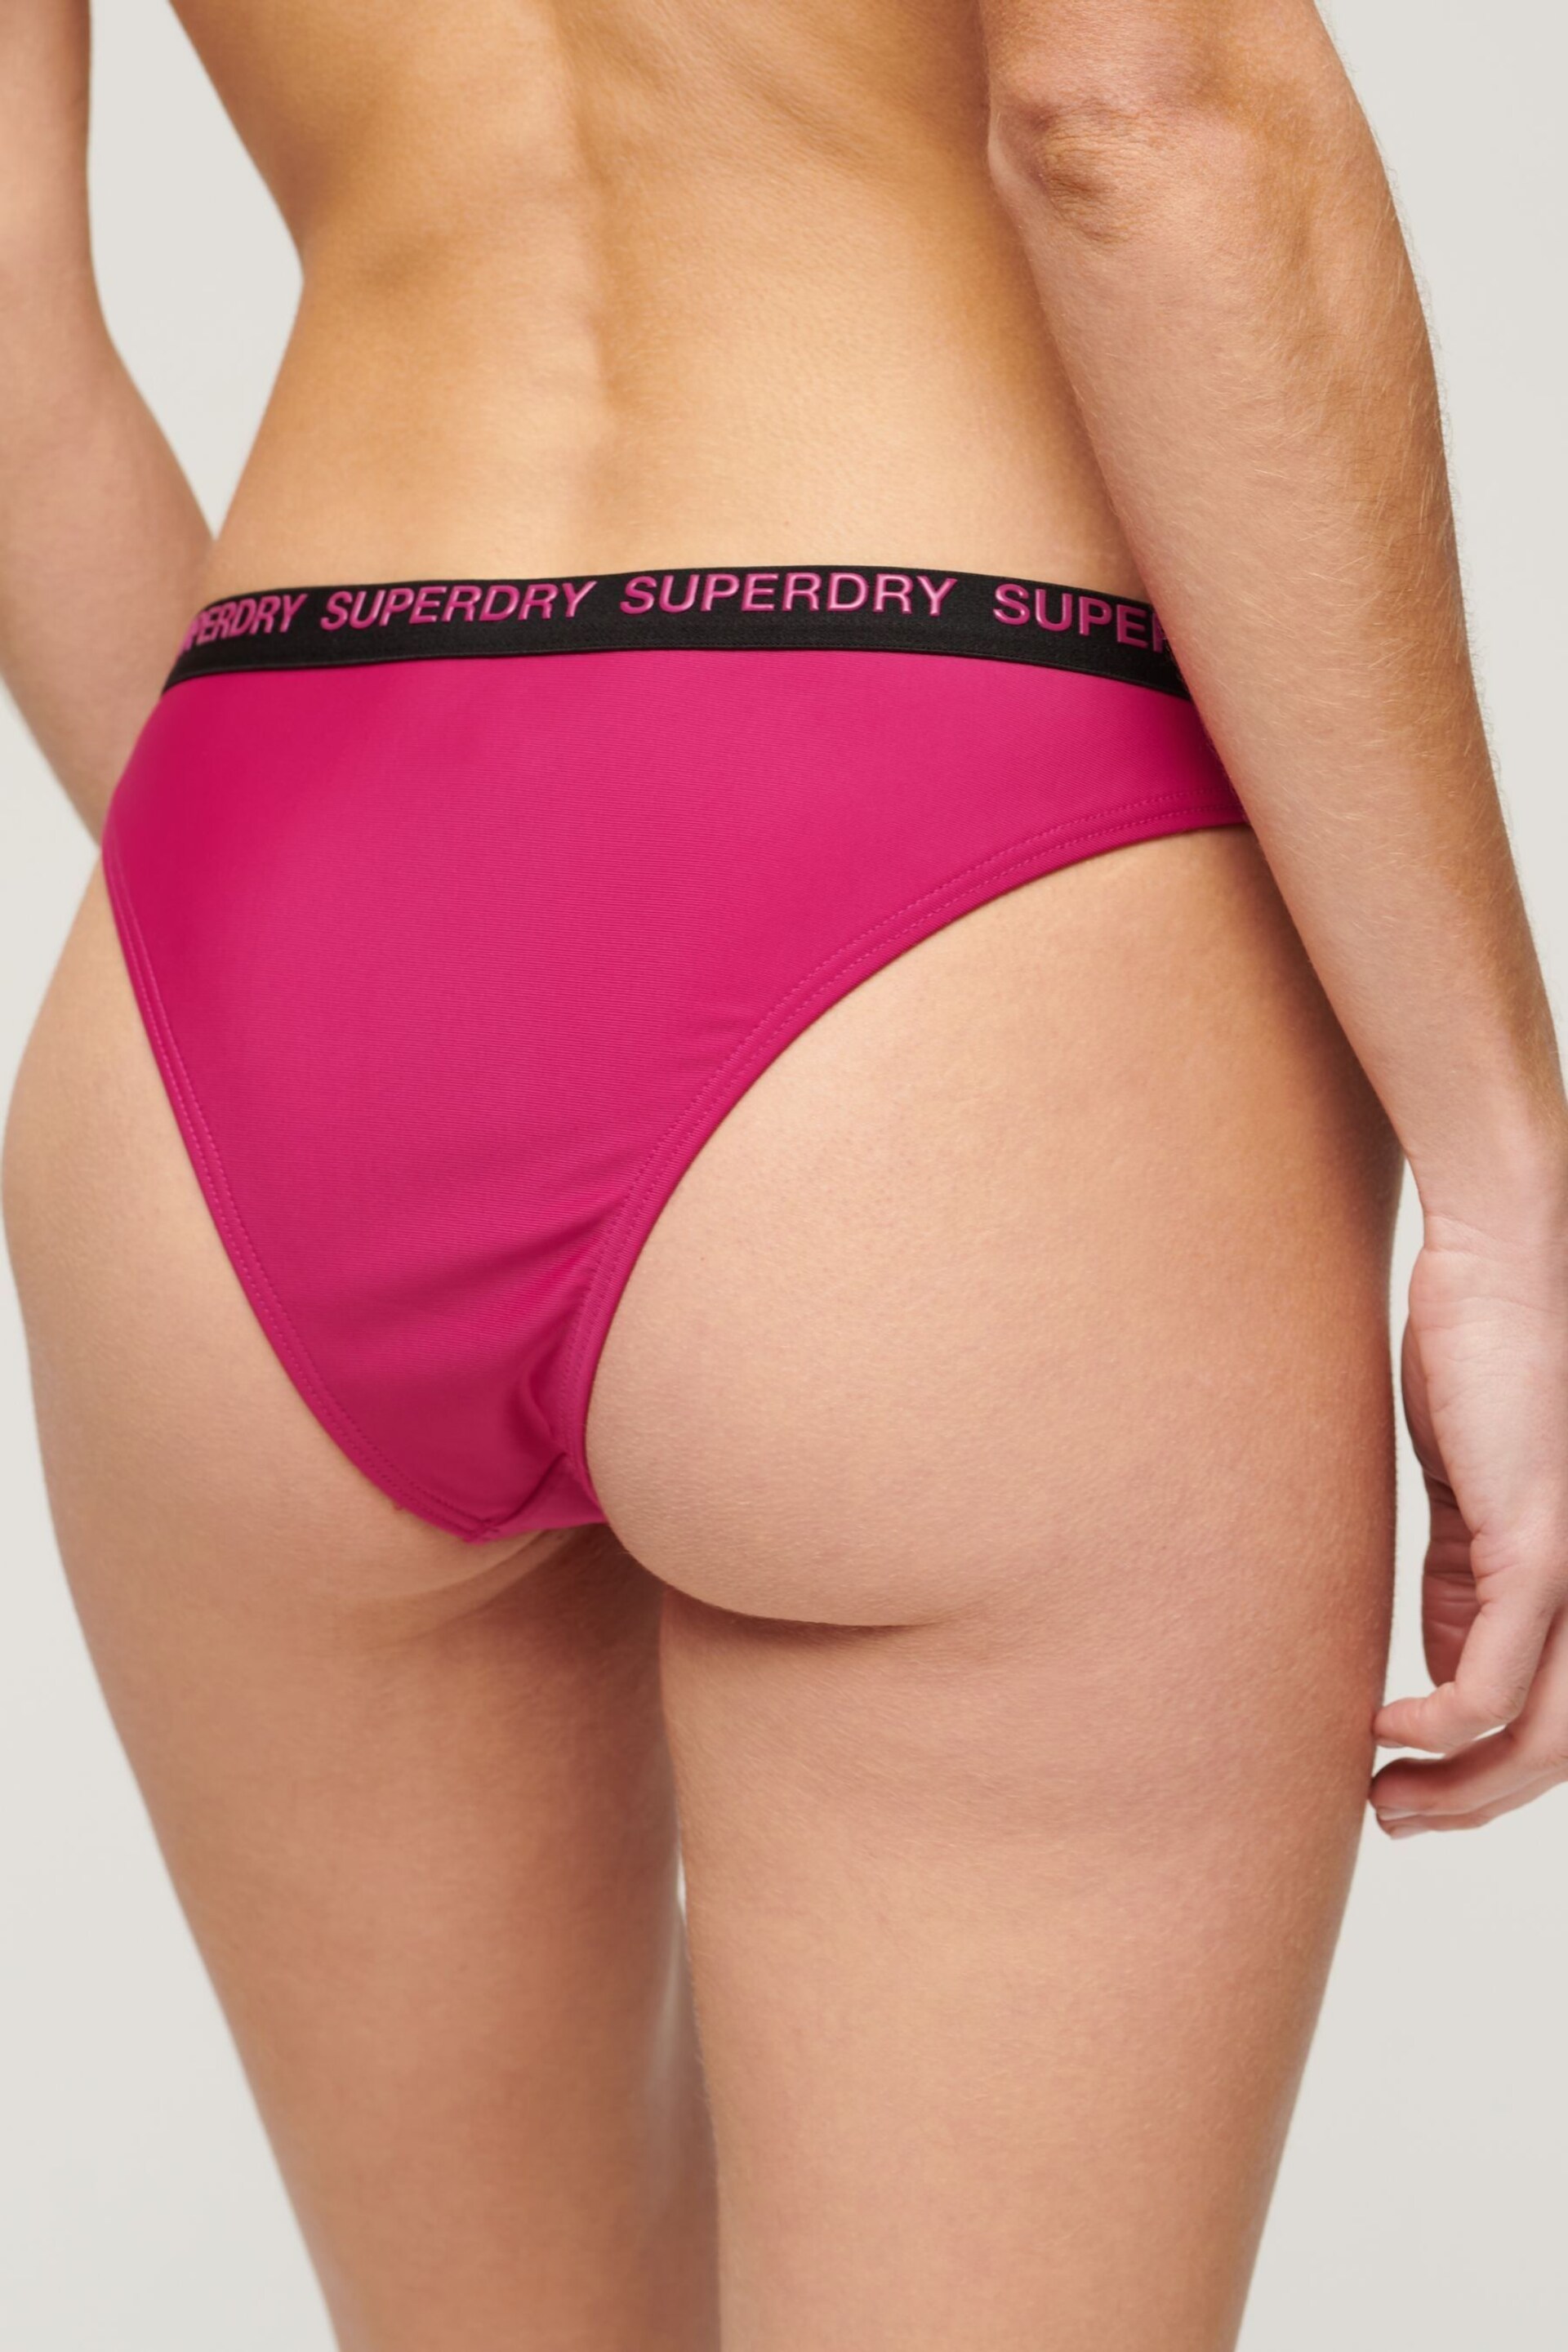 SUPERDRY Pink SUPERDRY Elastic Cheeky Bikini Briefs - Image 4 of 4